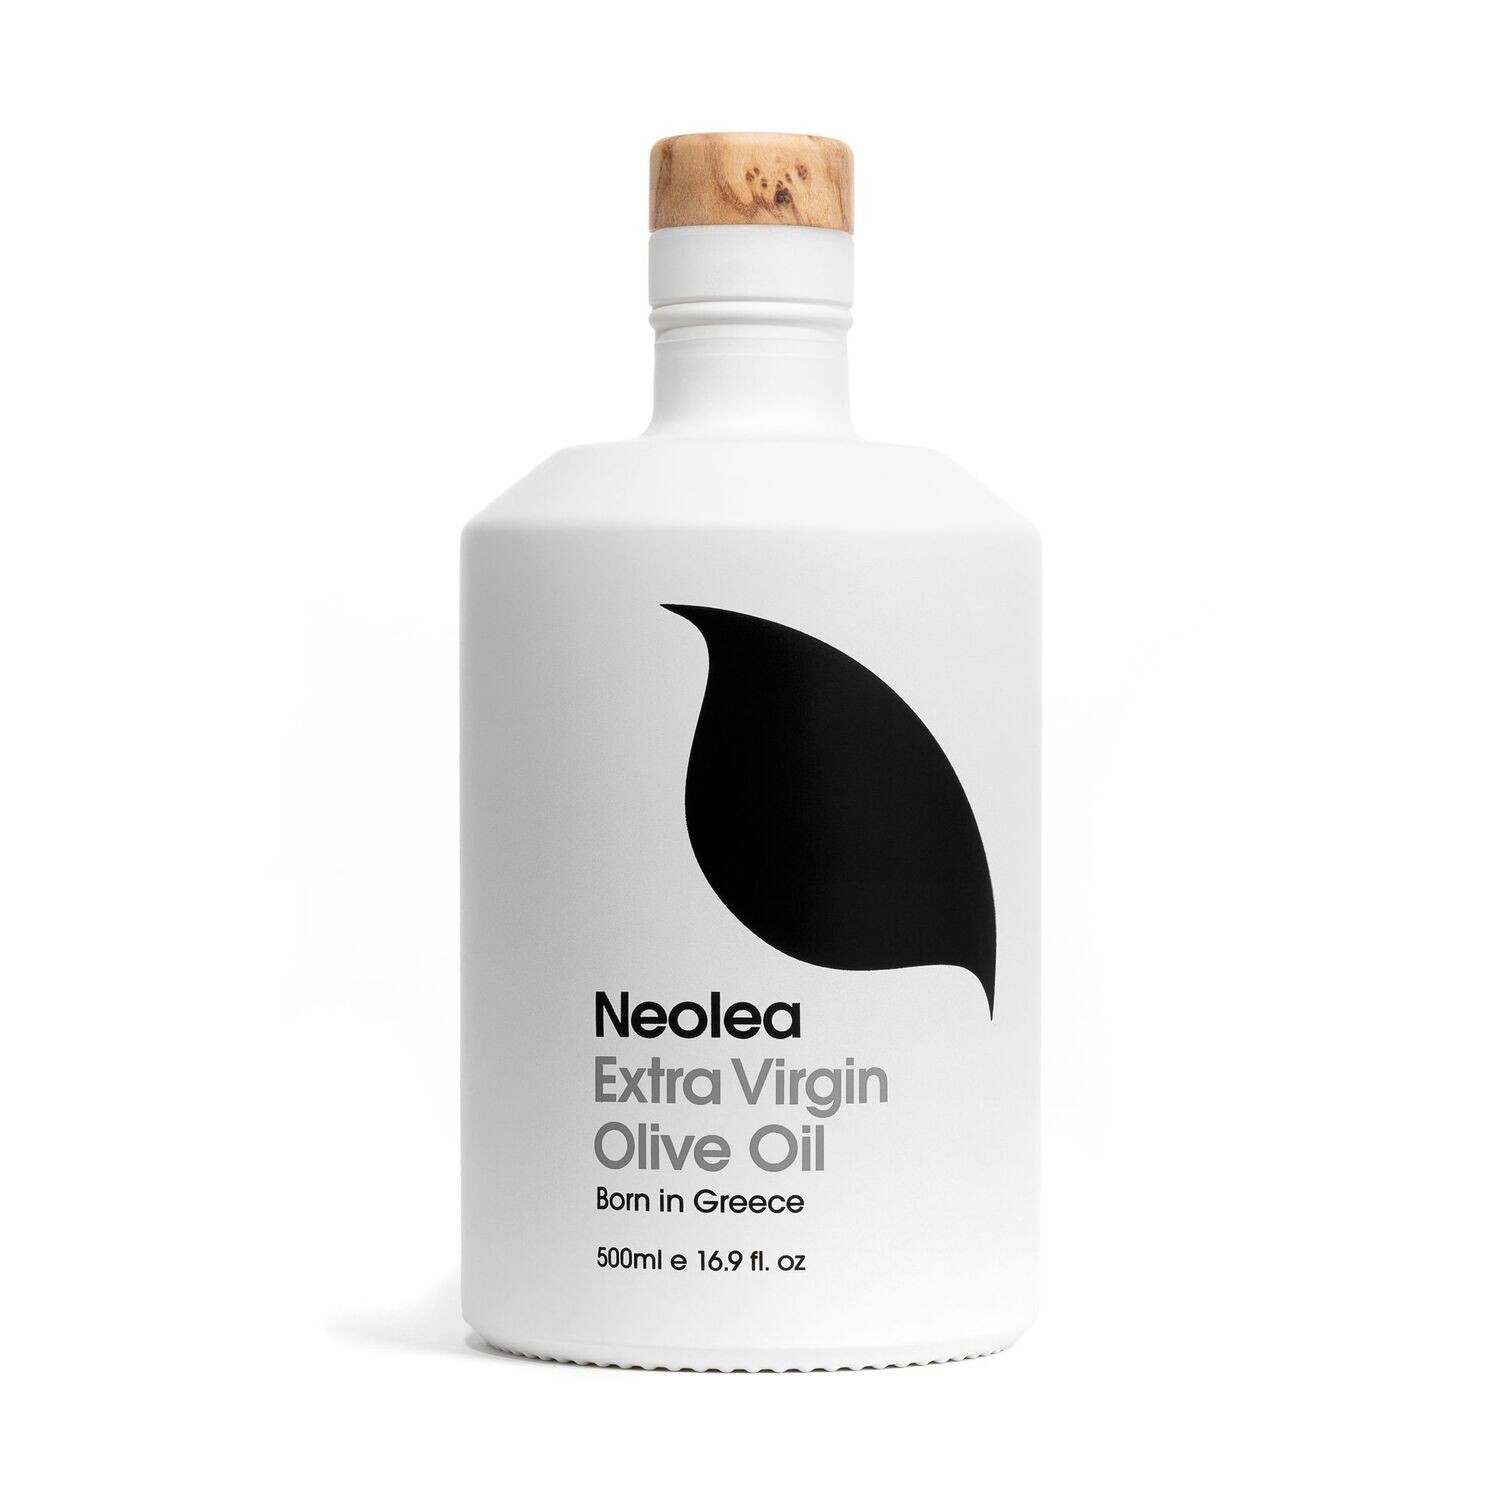 Neolea extra virgin olive oil 500 ml